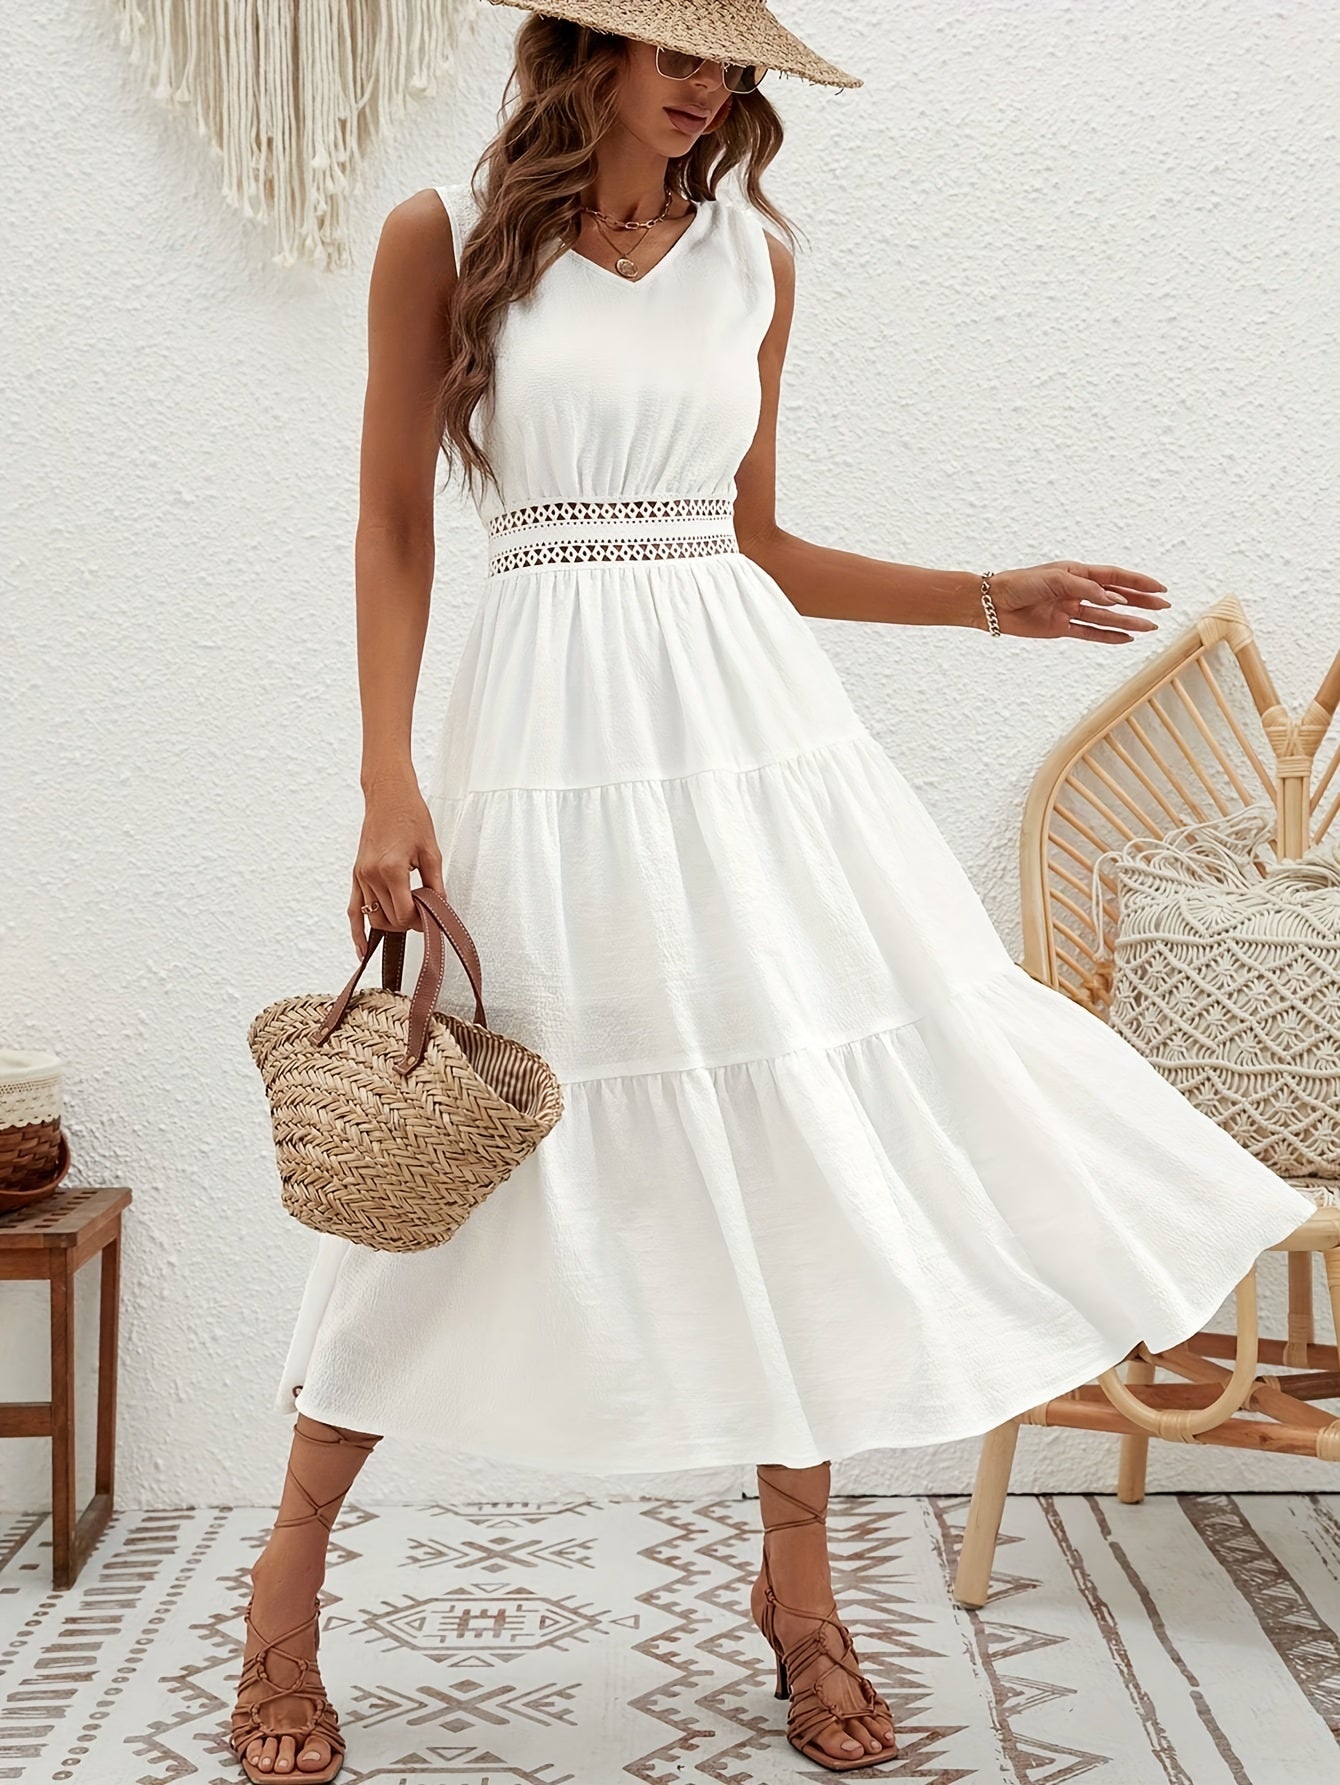 Elegant White Sleeveless Lace Midi Dress, Bohemian White Sleeveless Tiered Dress, Wedding party Dress, Cocktail Party DressWomen's Clothing